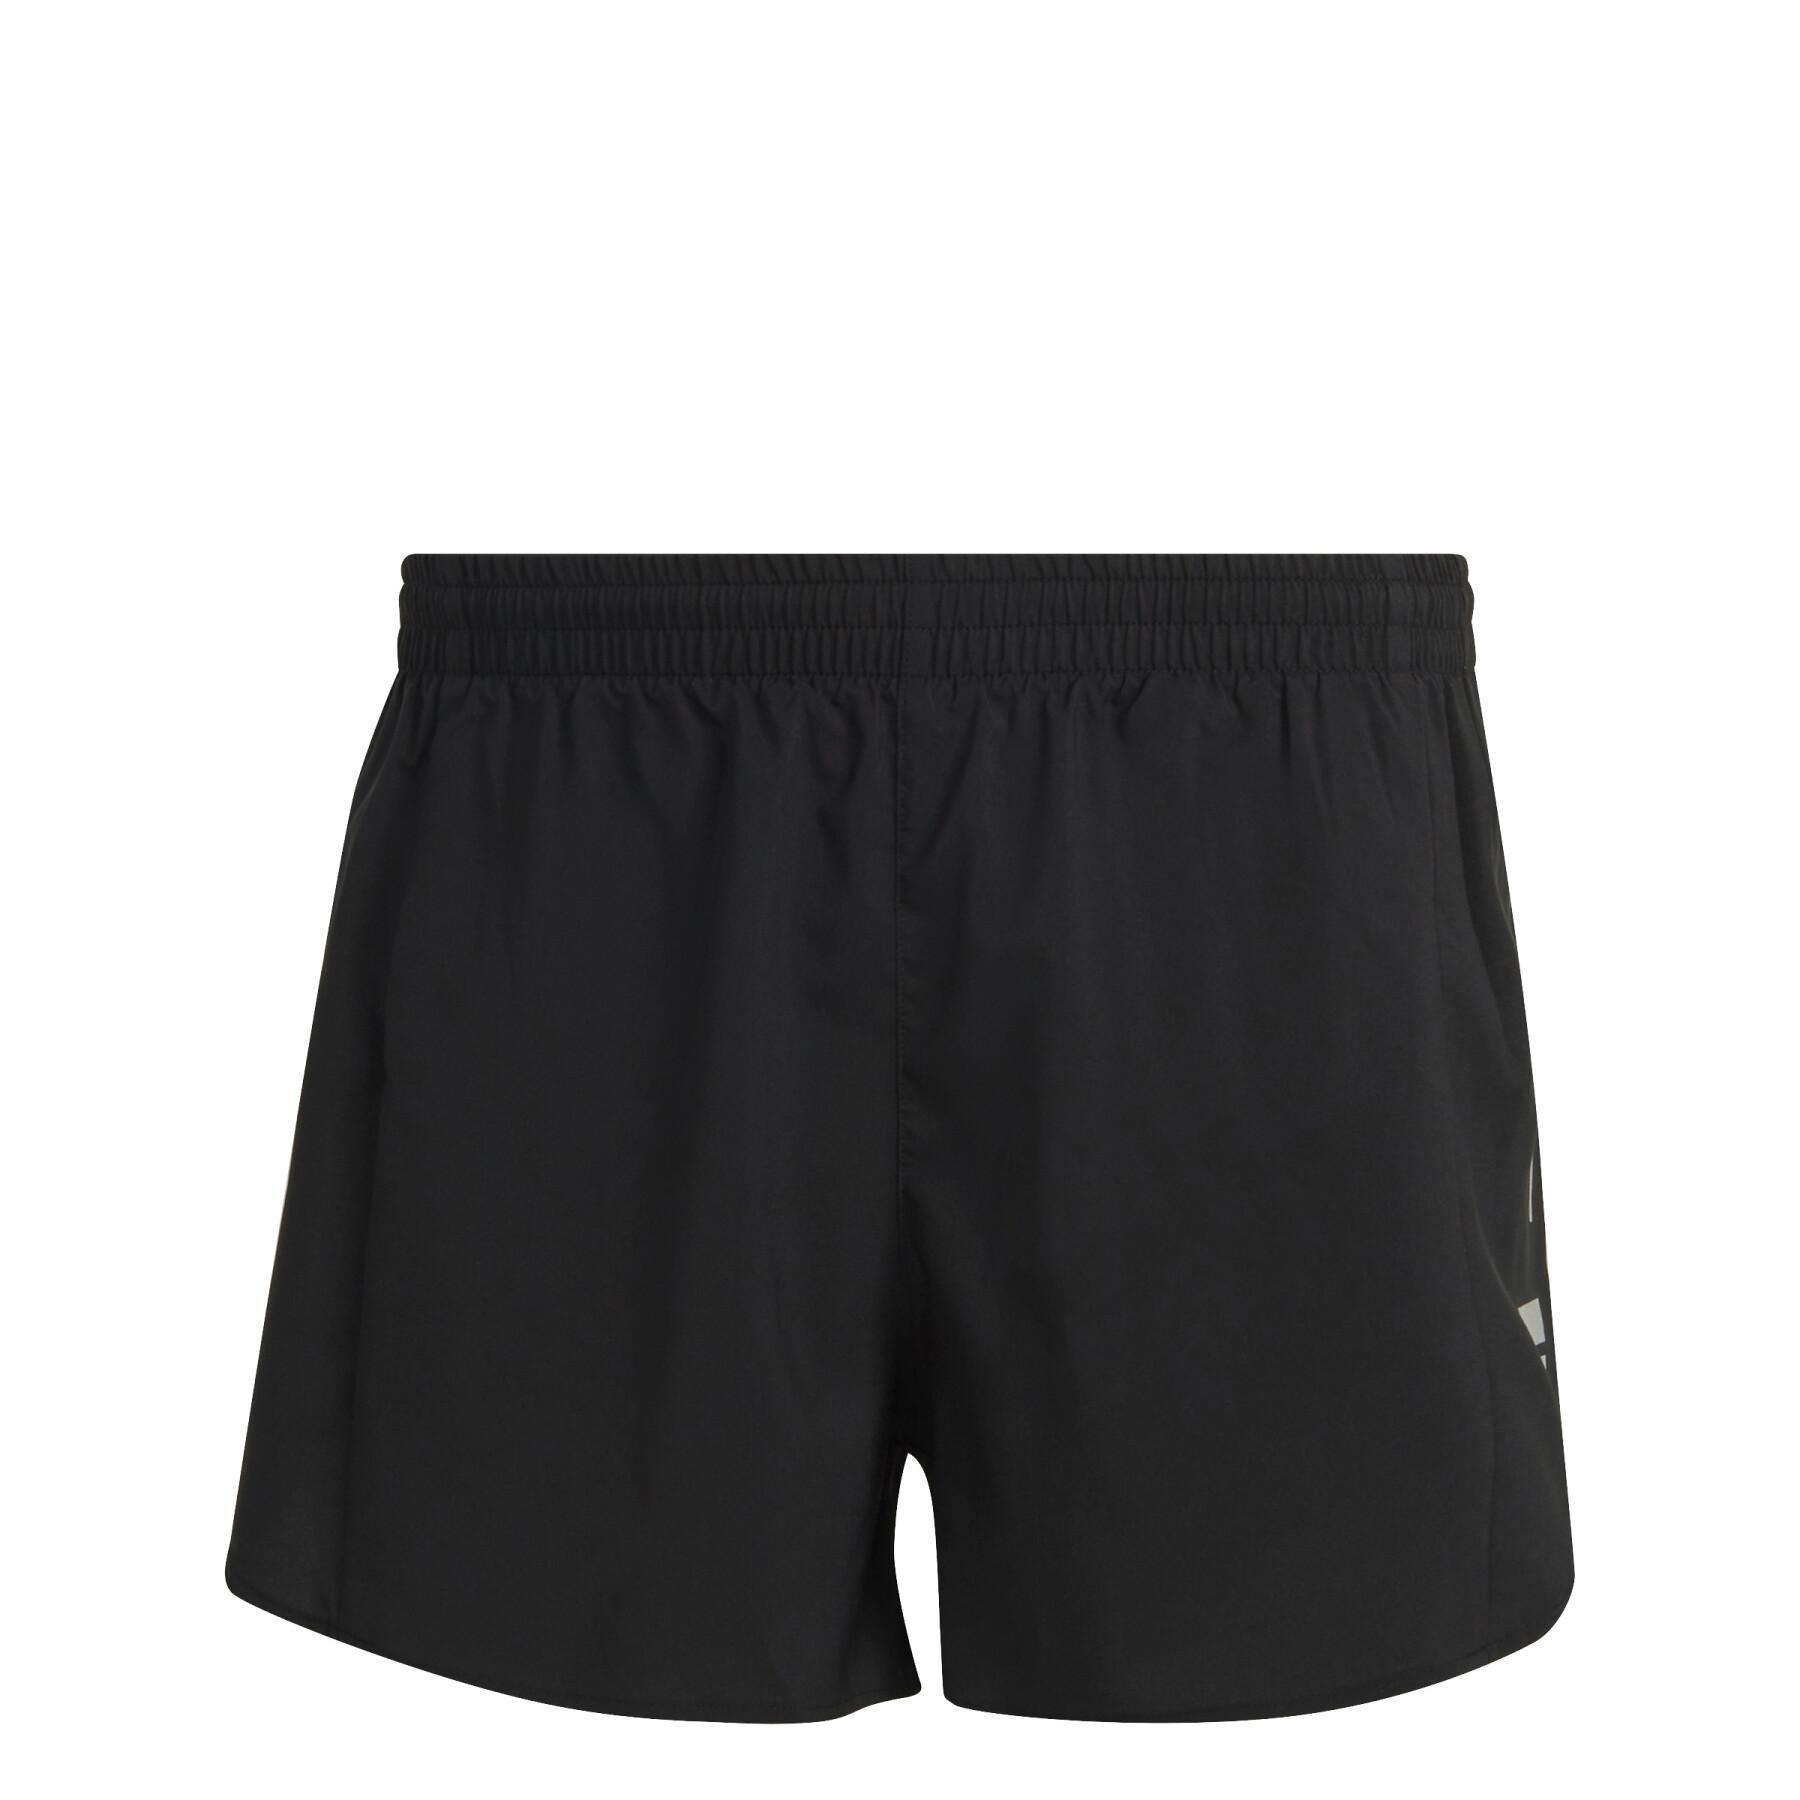 Short adidas Own the Run Split - Shorts - Men's wear - Handball wear